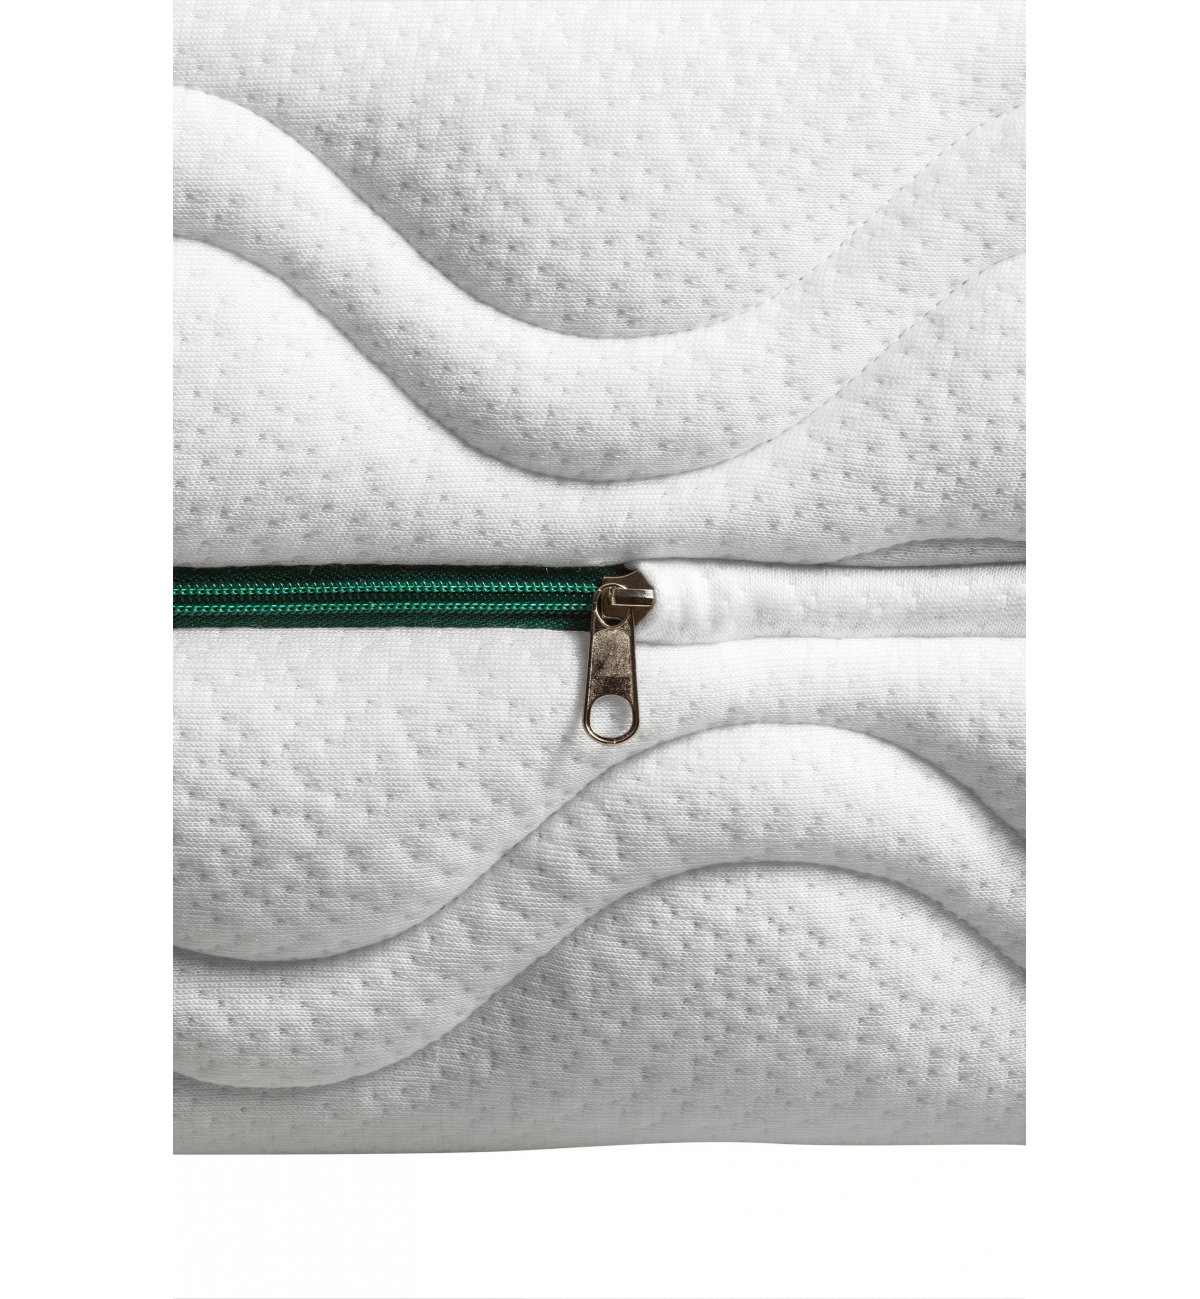 Baby mattress cover with Aloe Vera coating